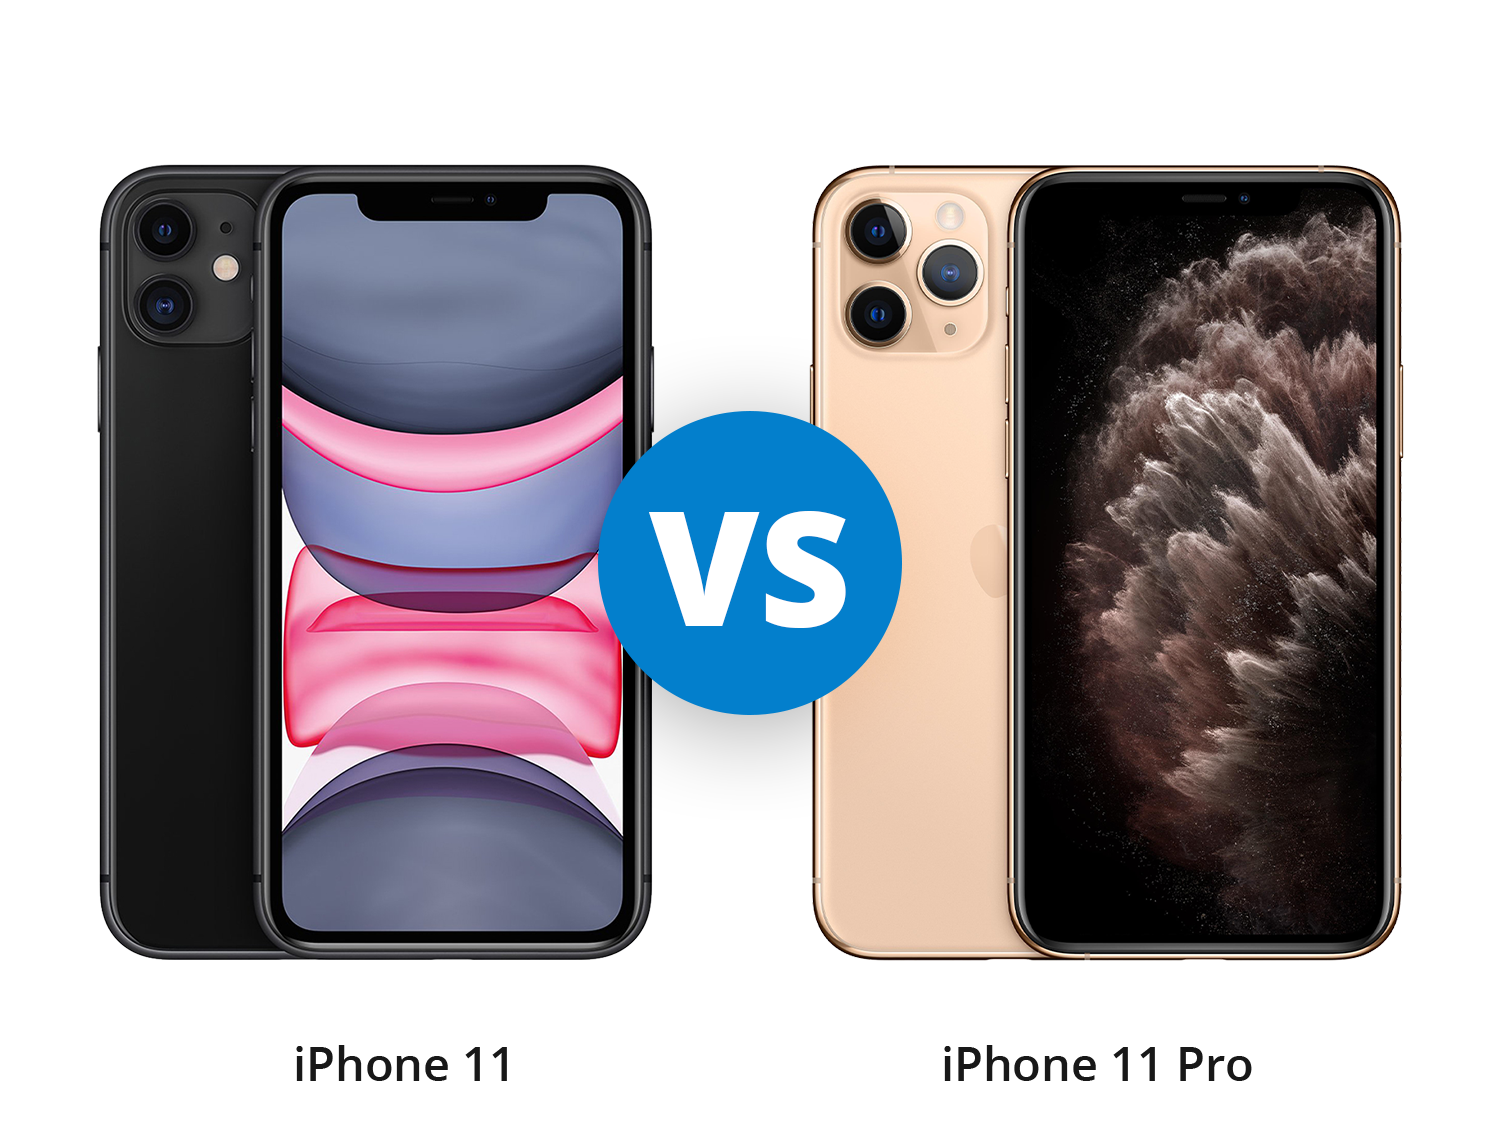 iPhone 11 vs iPhone 11 Pro